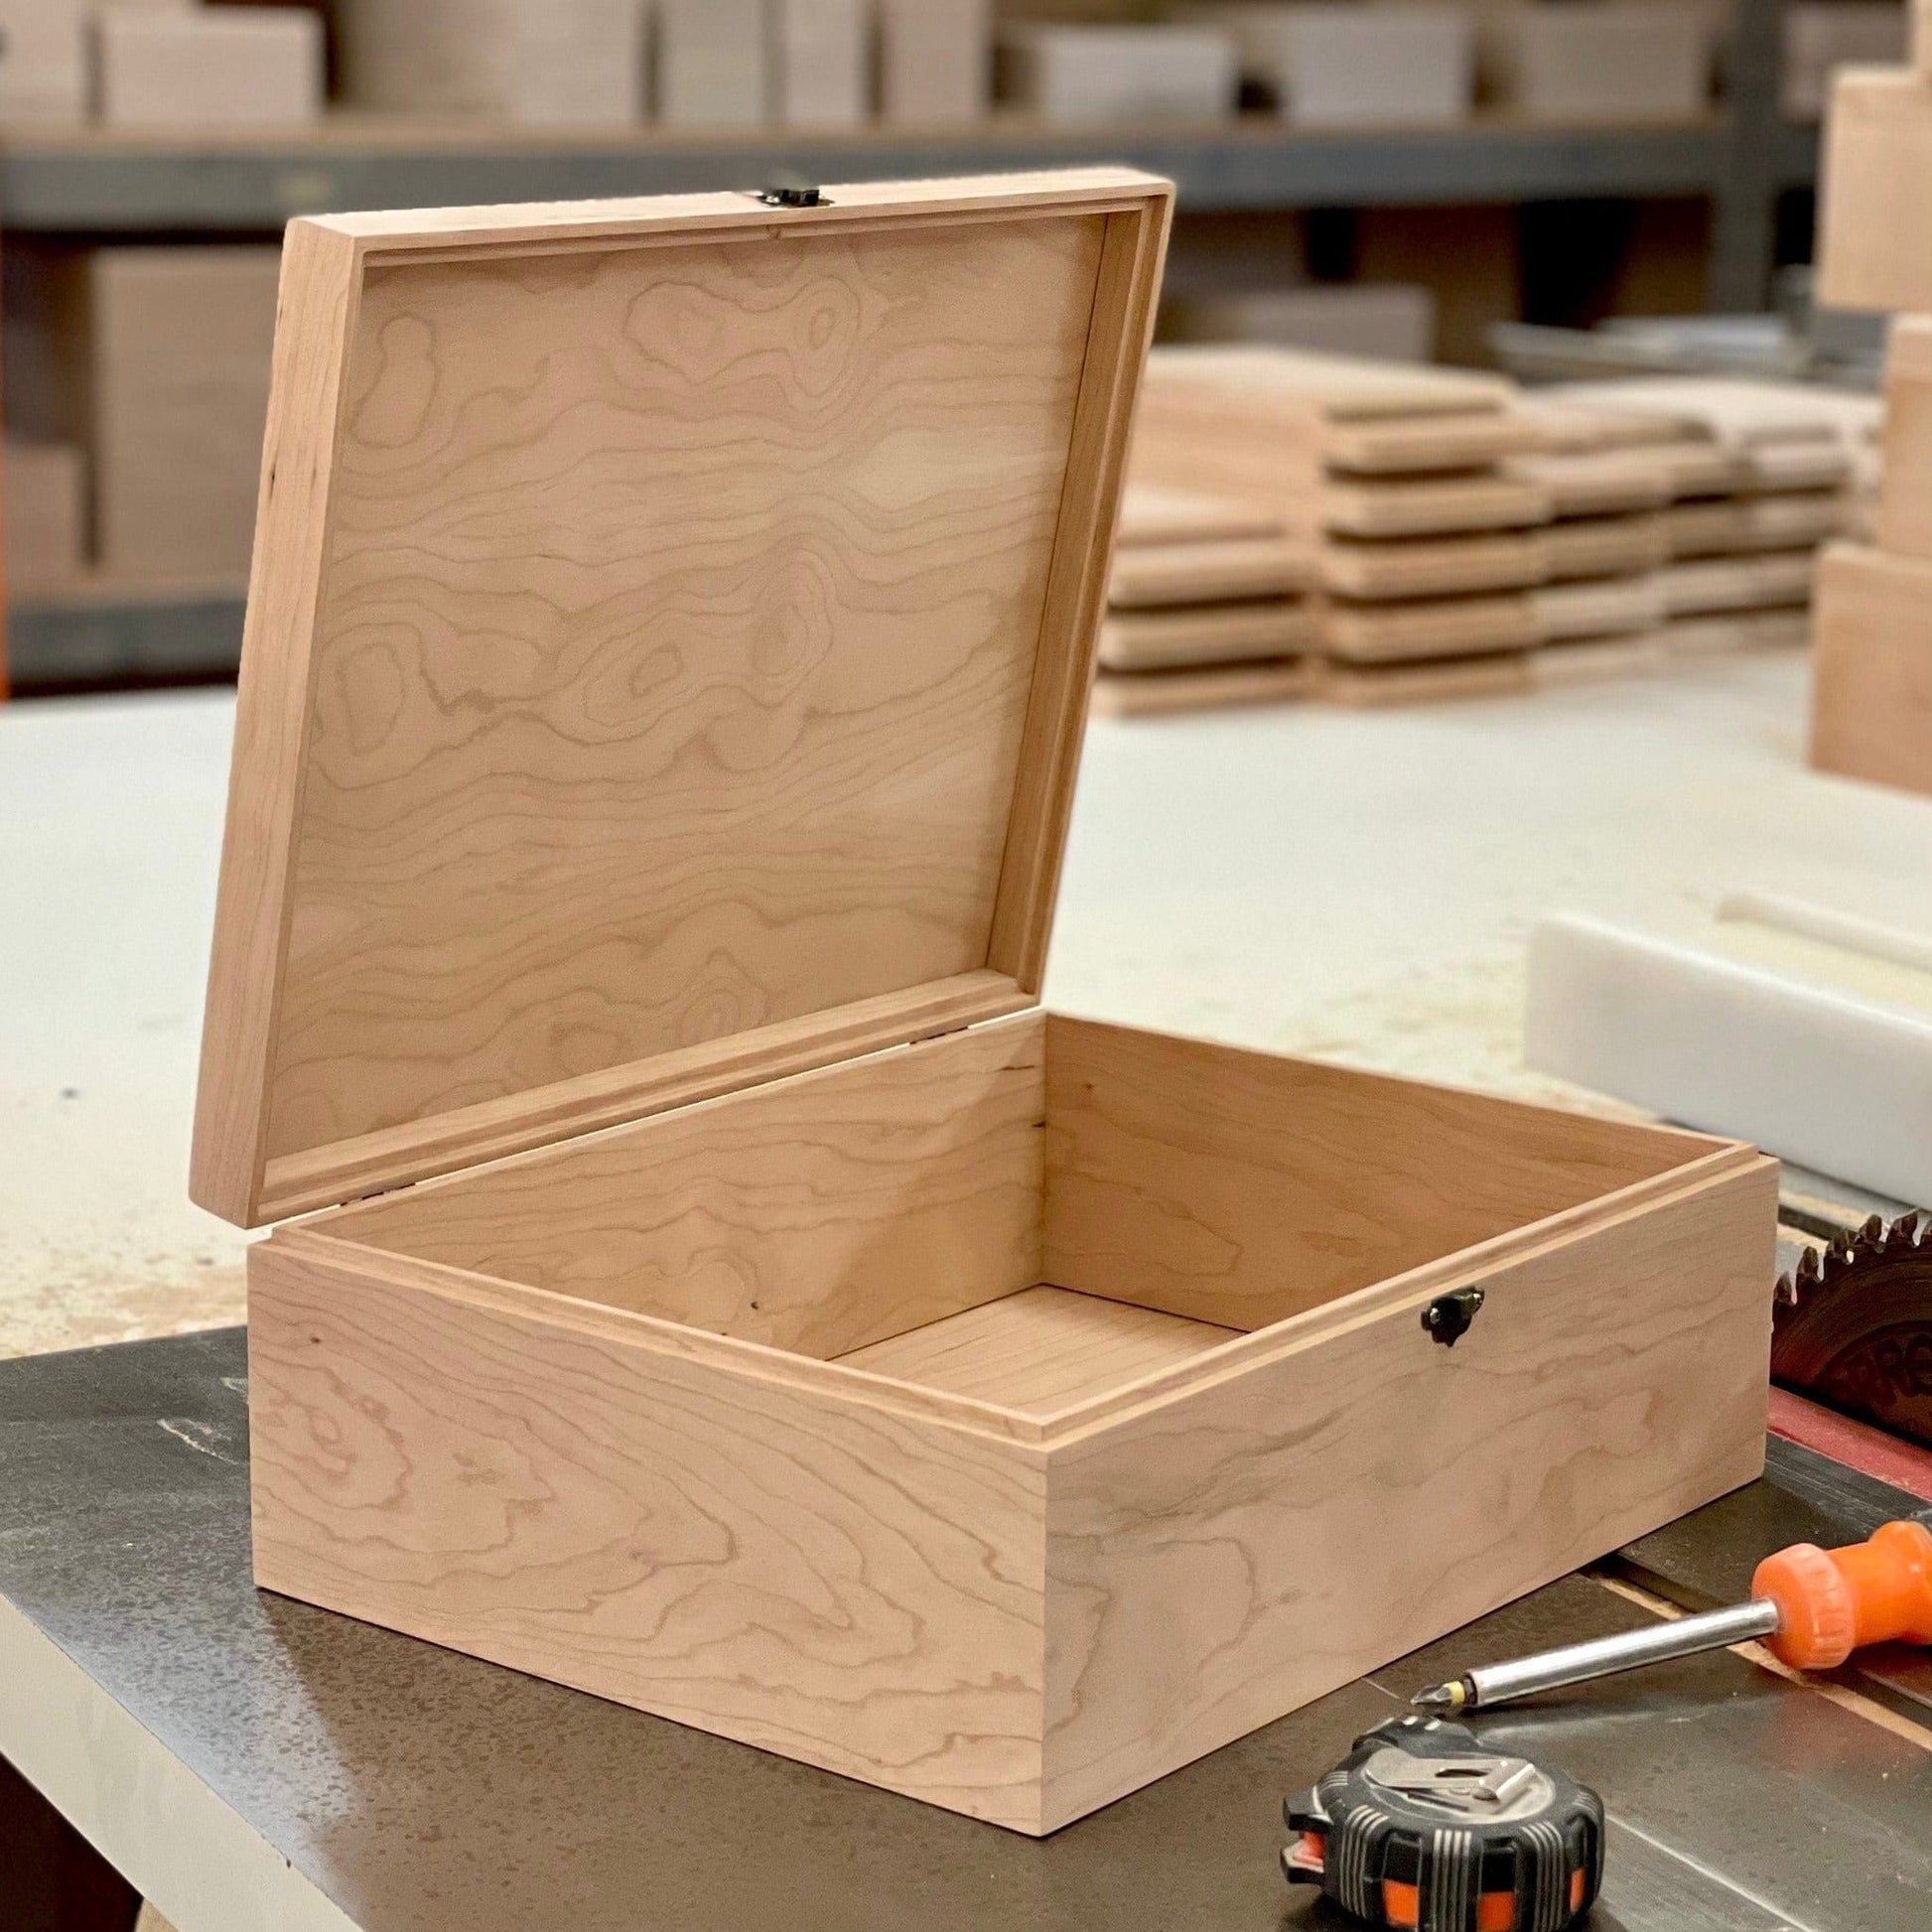 Larger Hardwood Custom Wooden Boxes